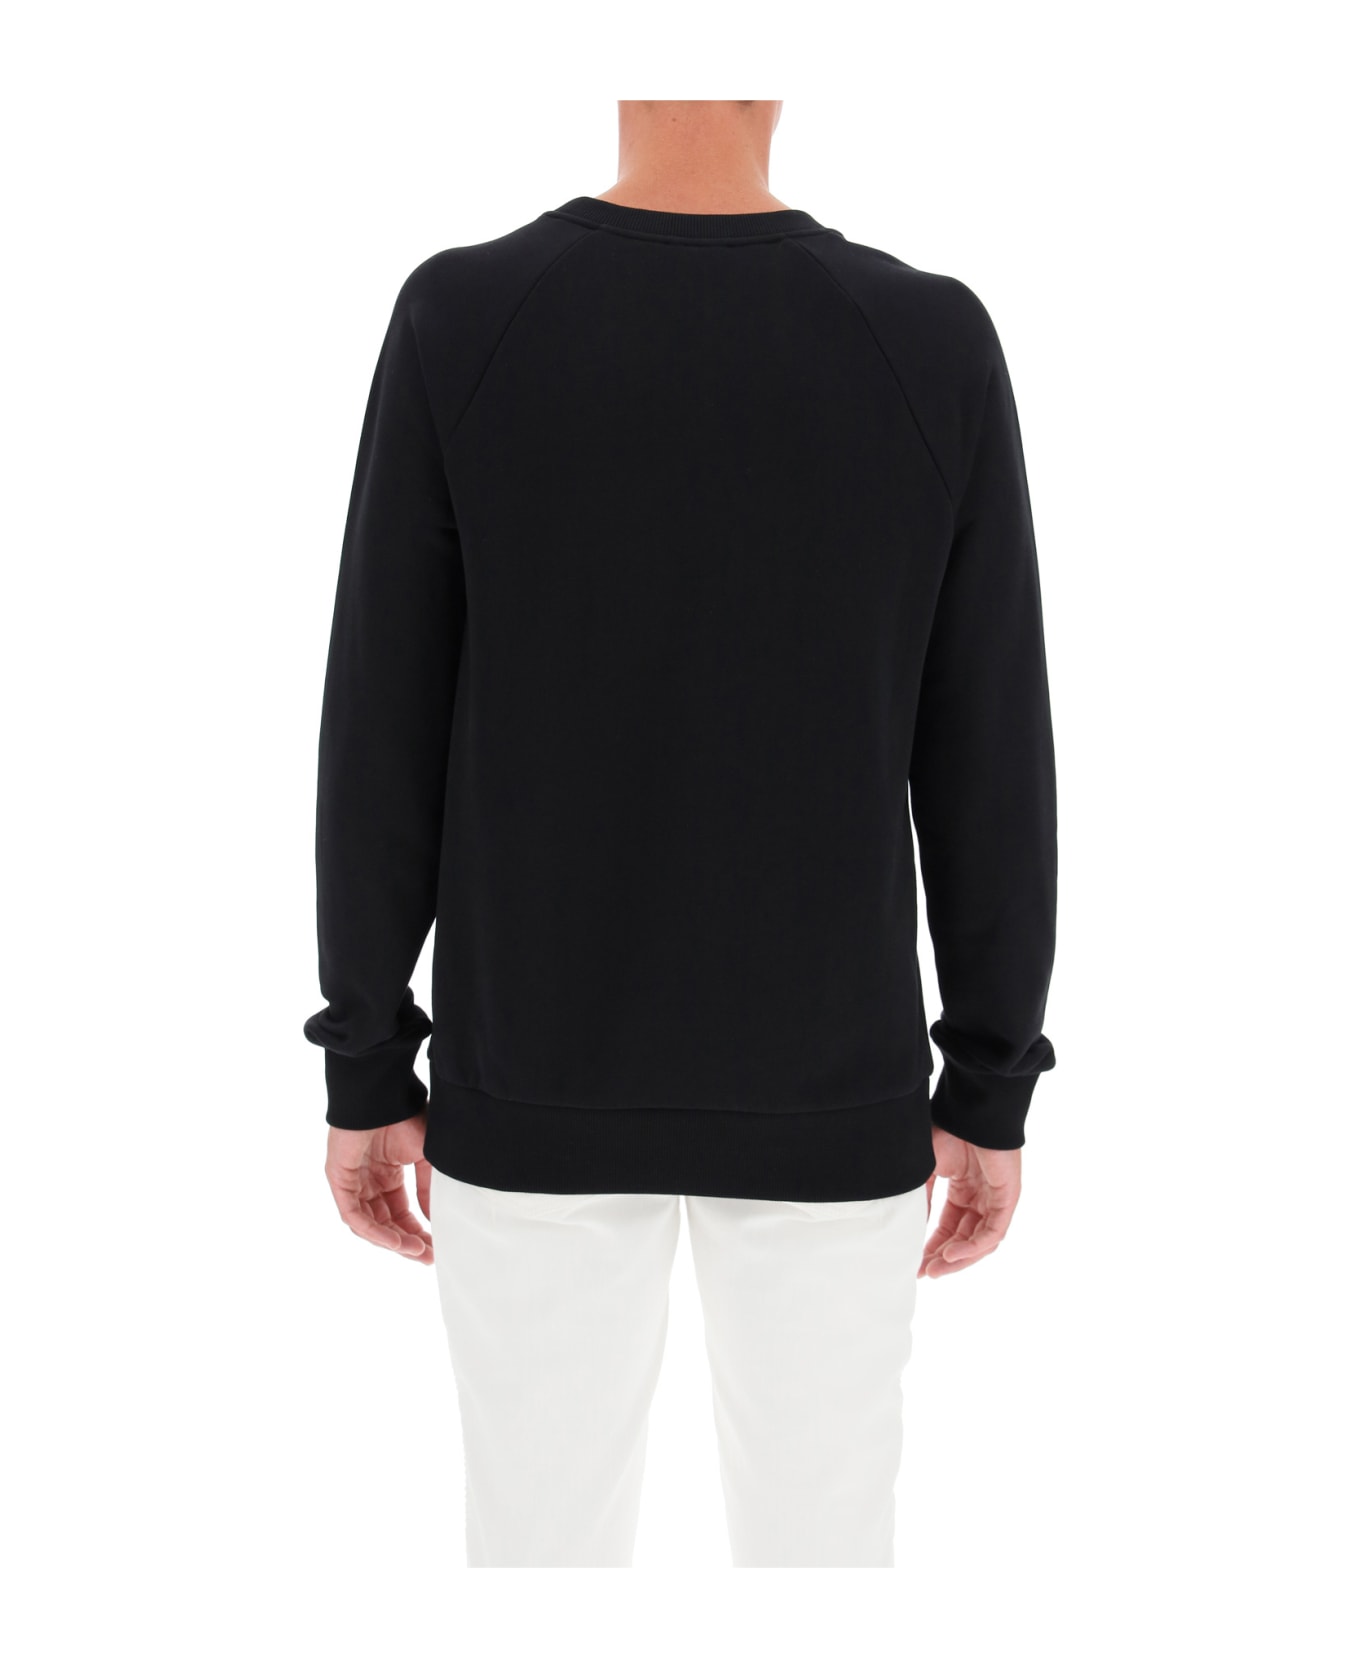 Balmain Logo Print Sweatshirt - Nero/bianco